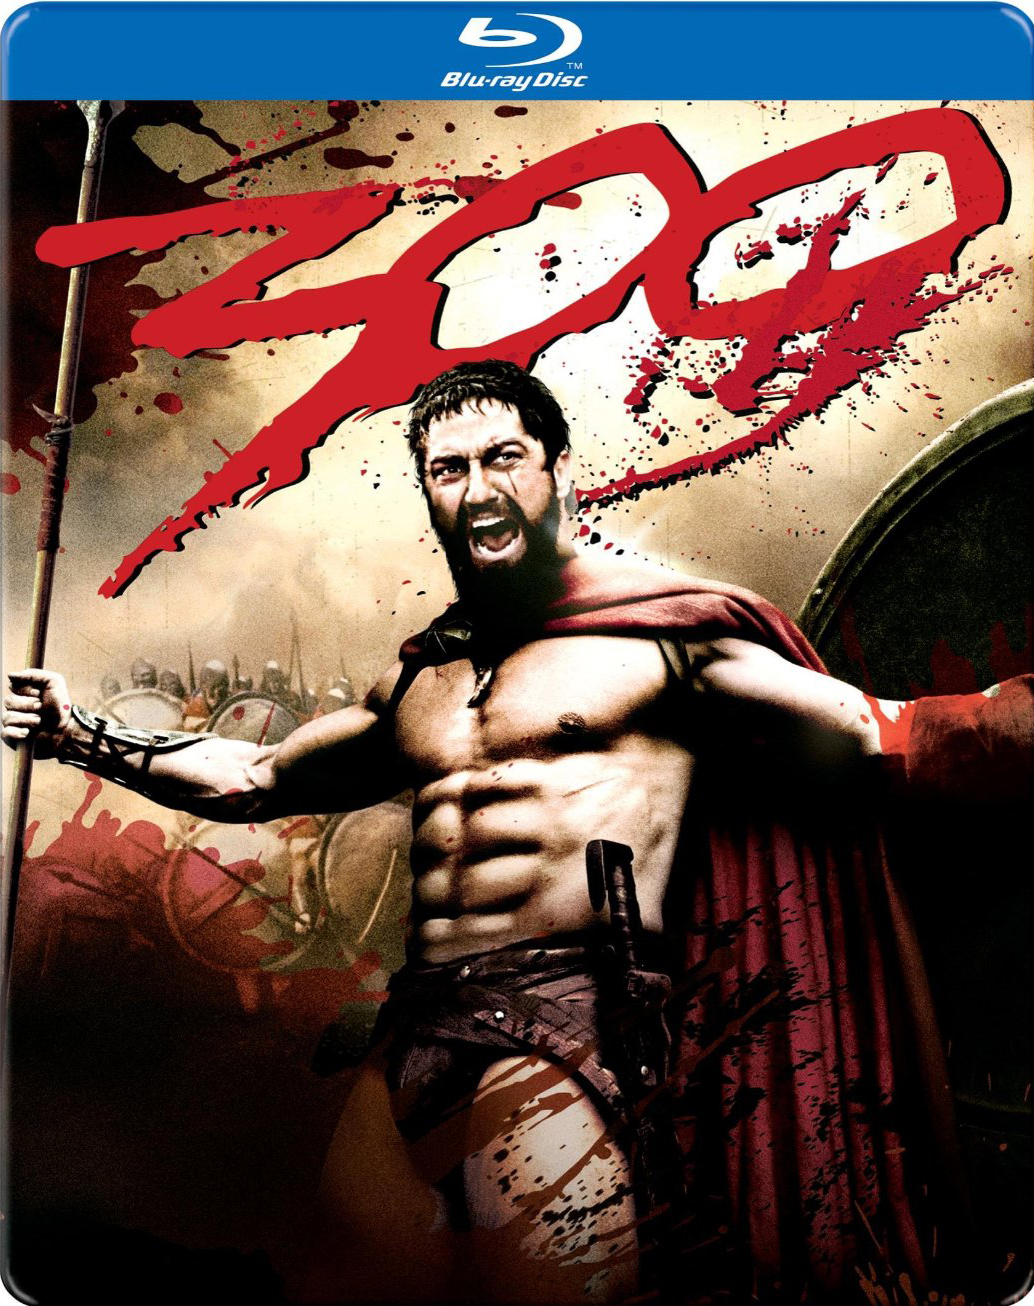 300: Steelbook Edition